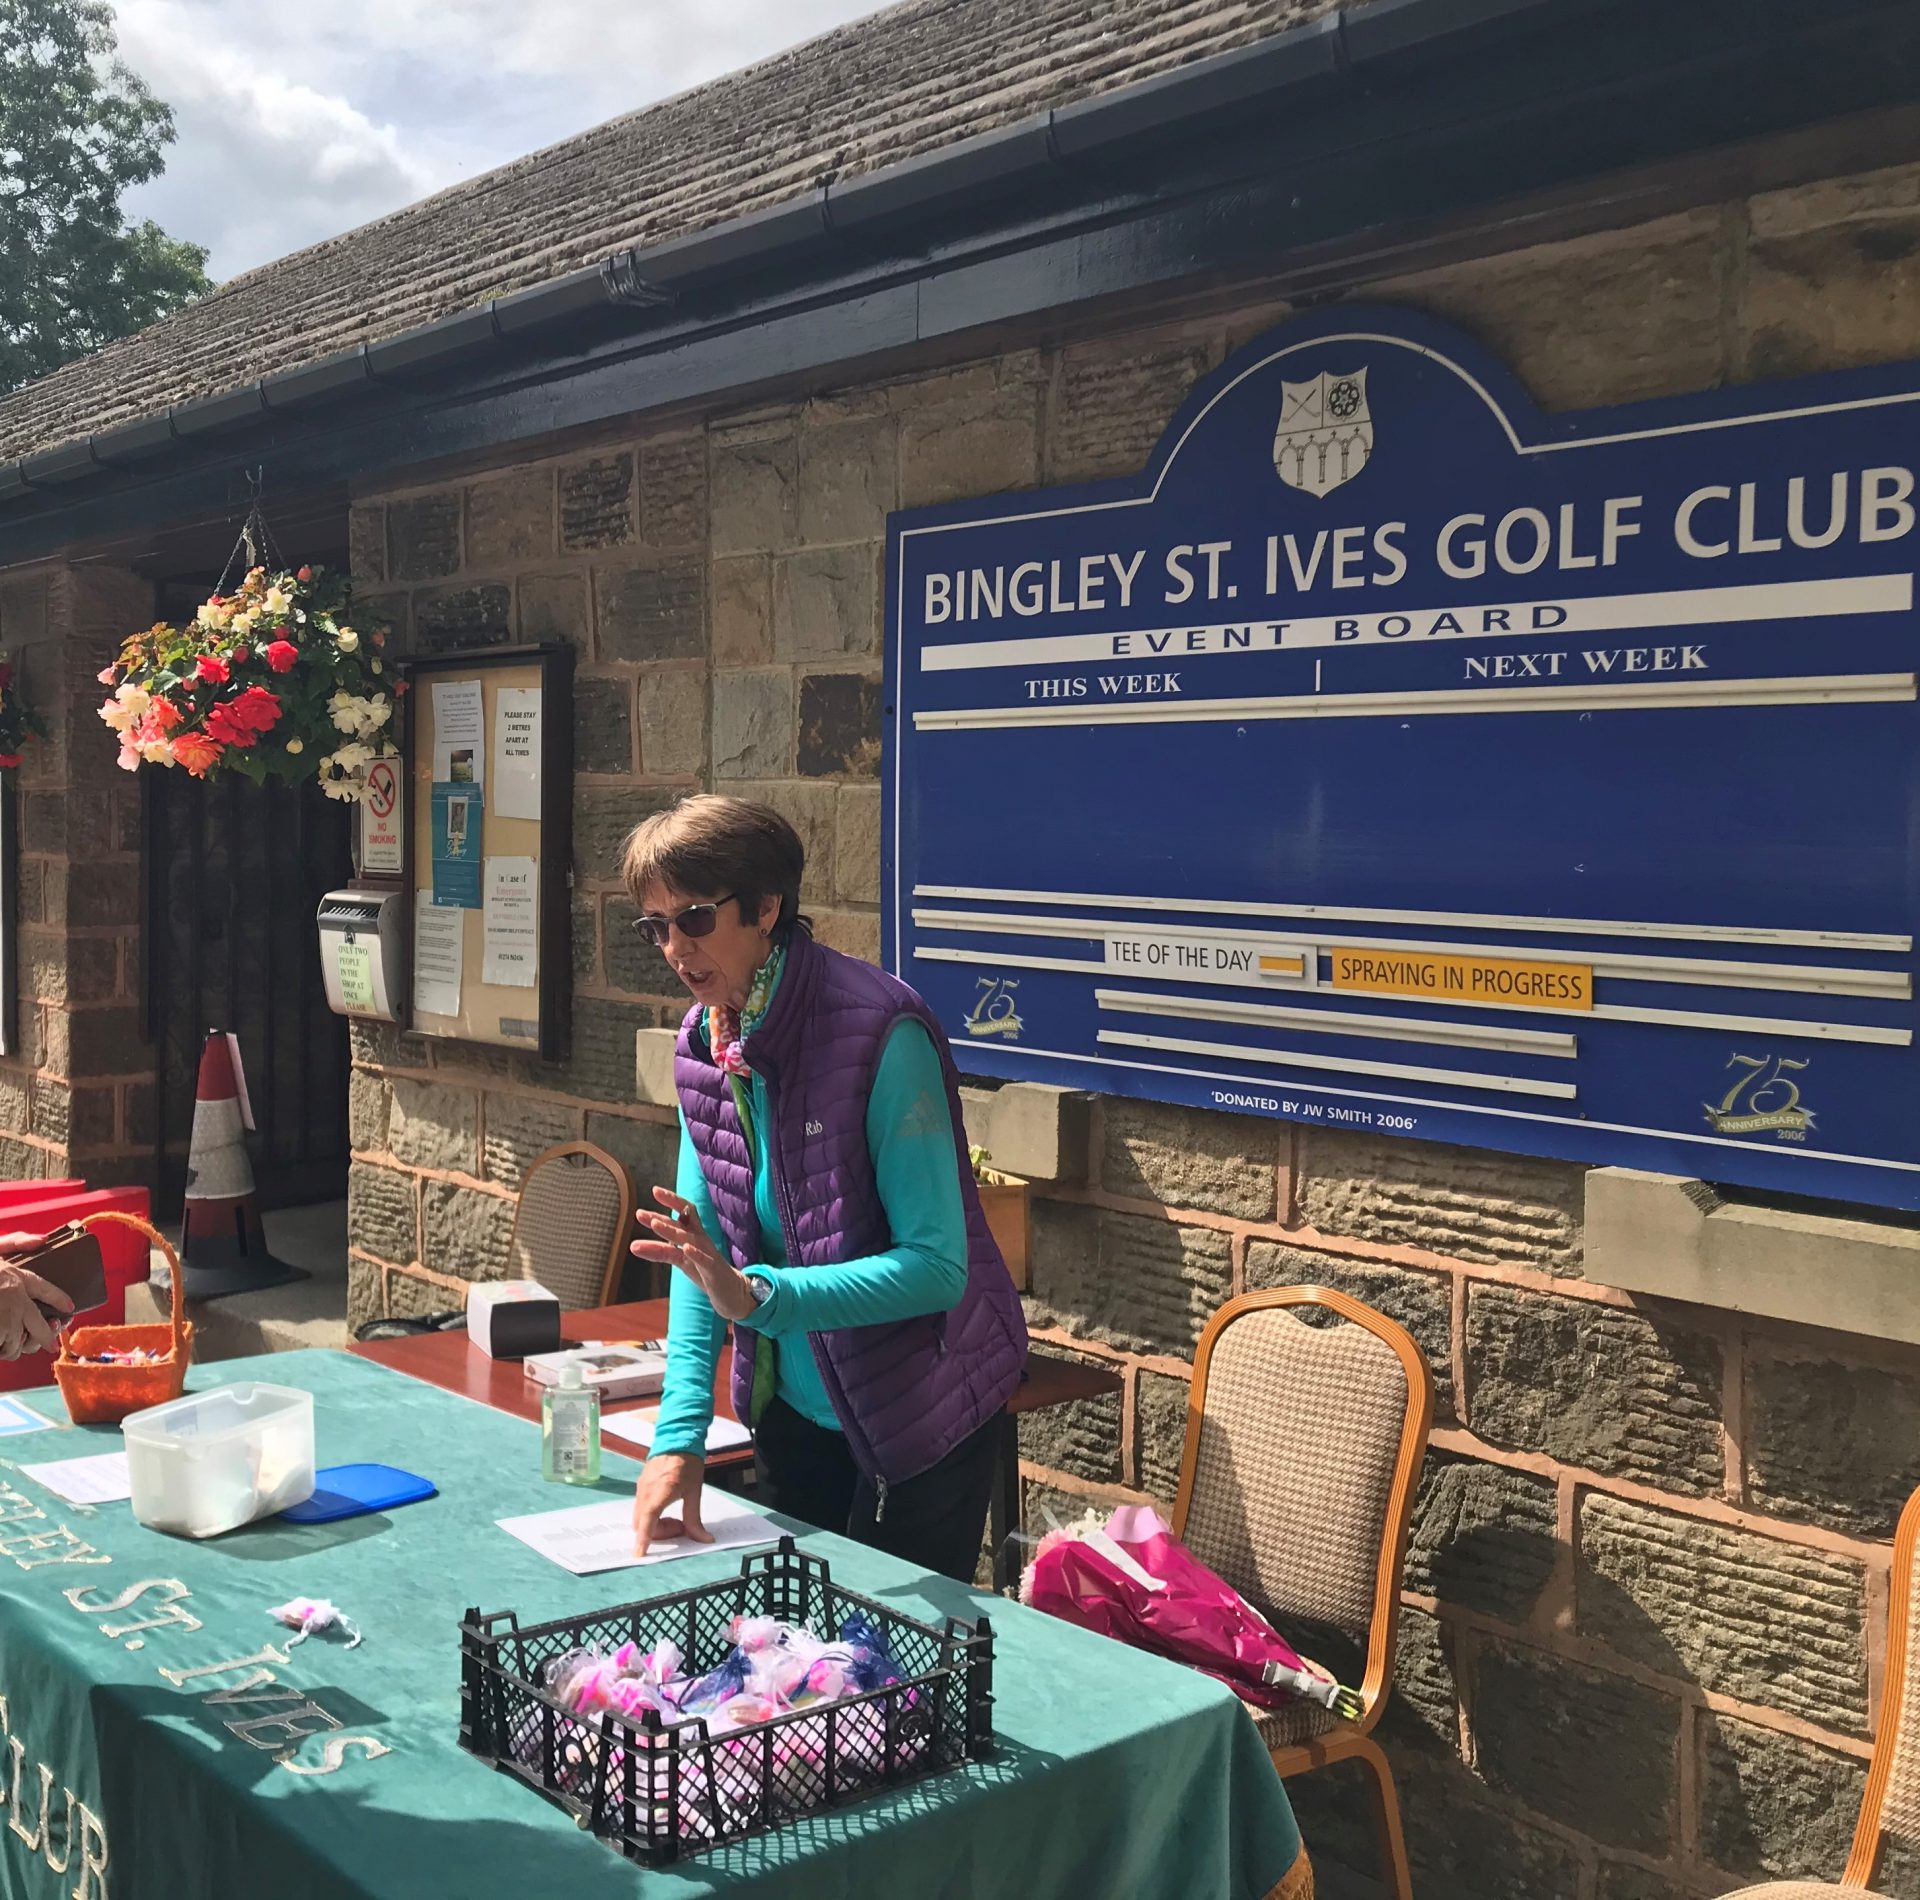 Bingley St Ives Golf Club raise £1,500 for Mind in Bradford